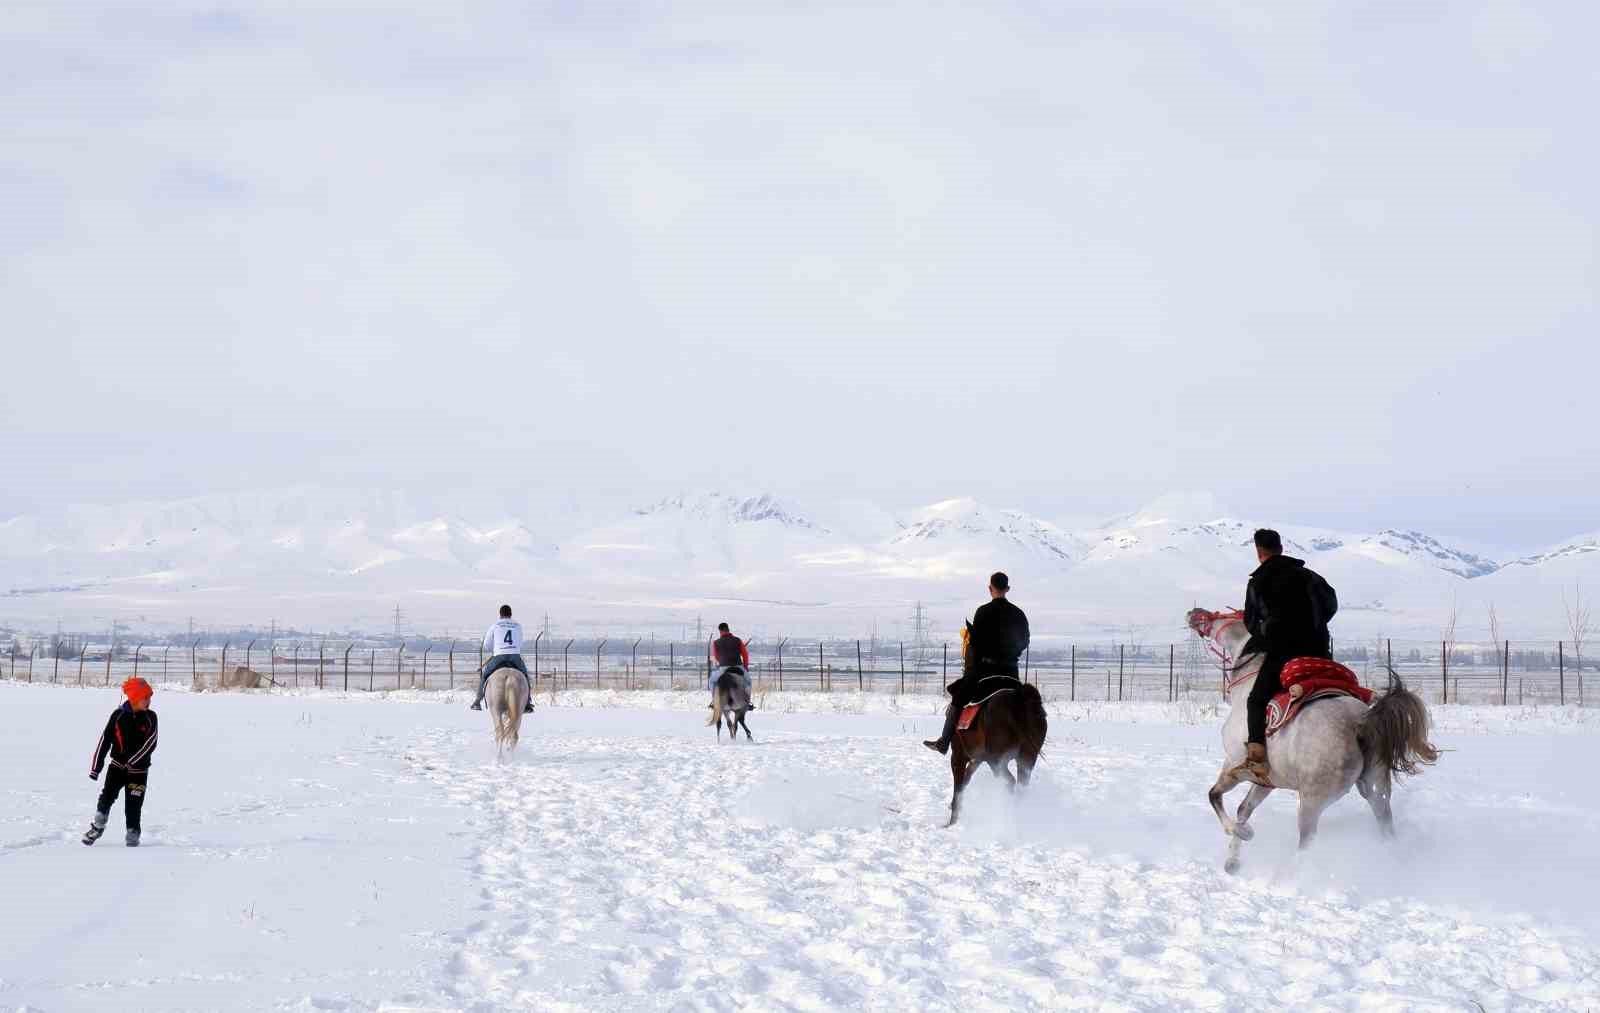 Erzurumda Kar Uzerinde Cirit Keyfi 1 Hqpvbbxr